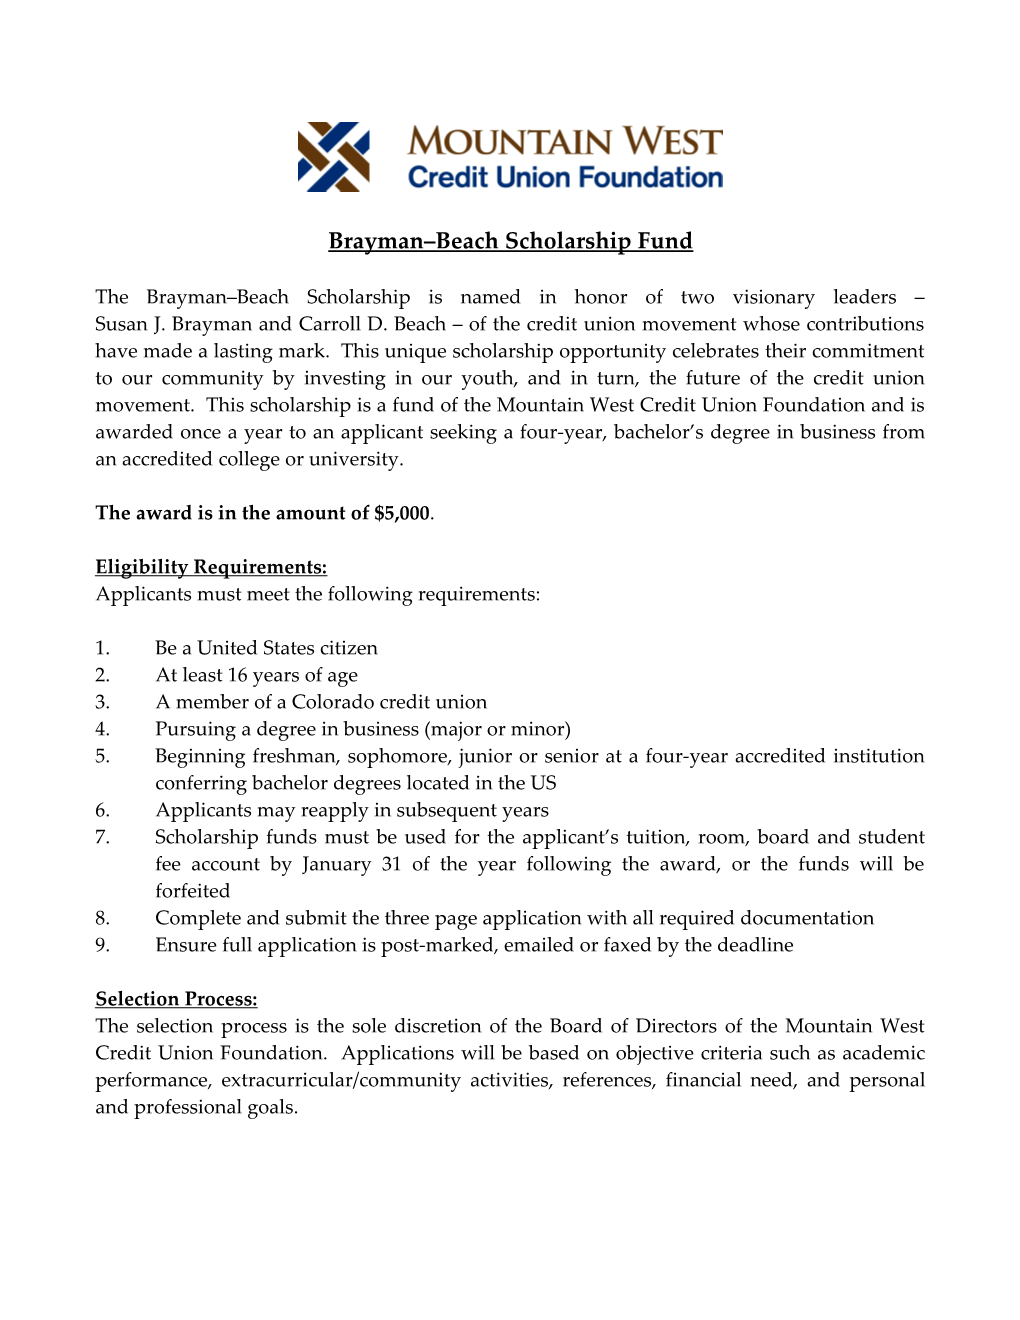 The Colorado Credit Union League Foundation